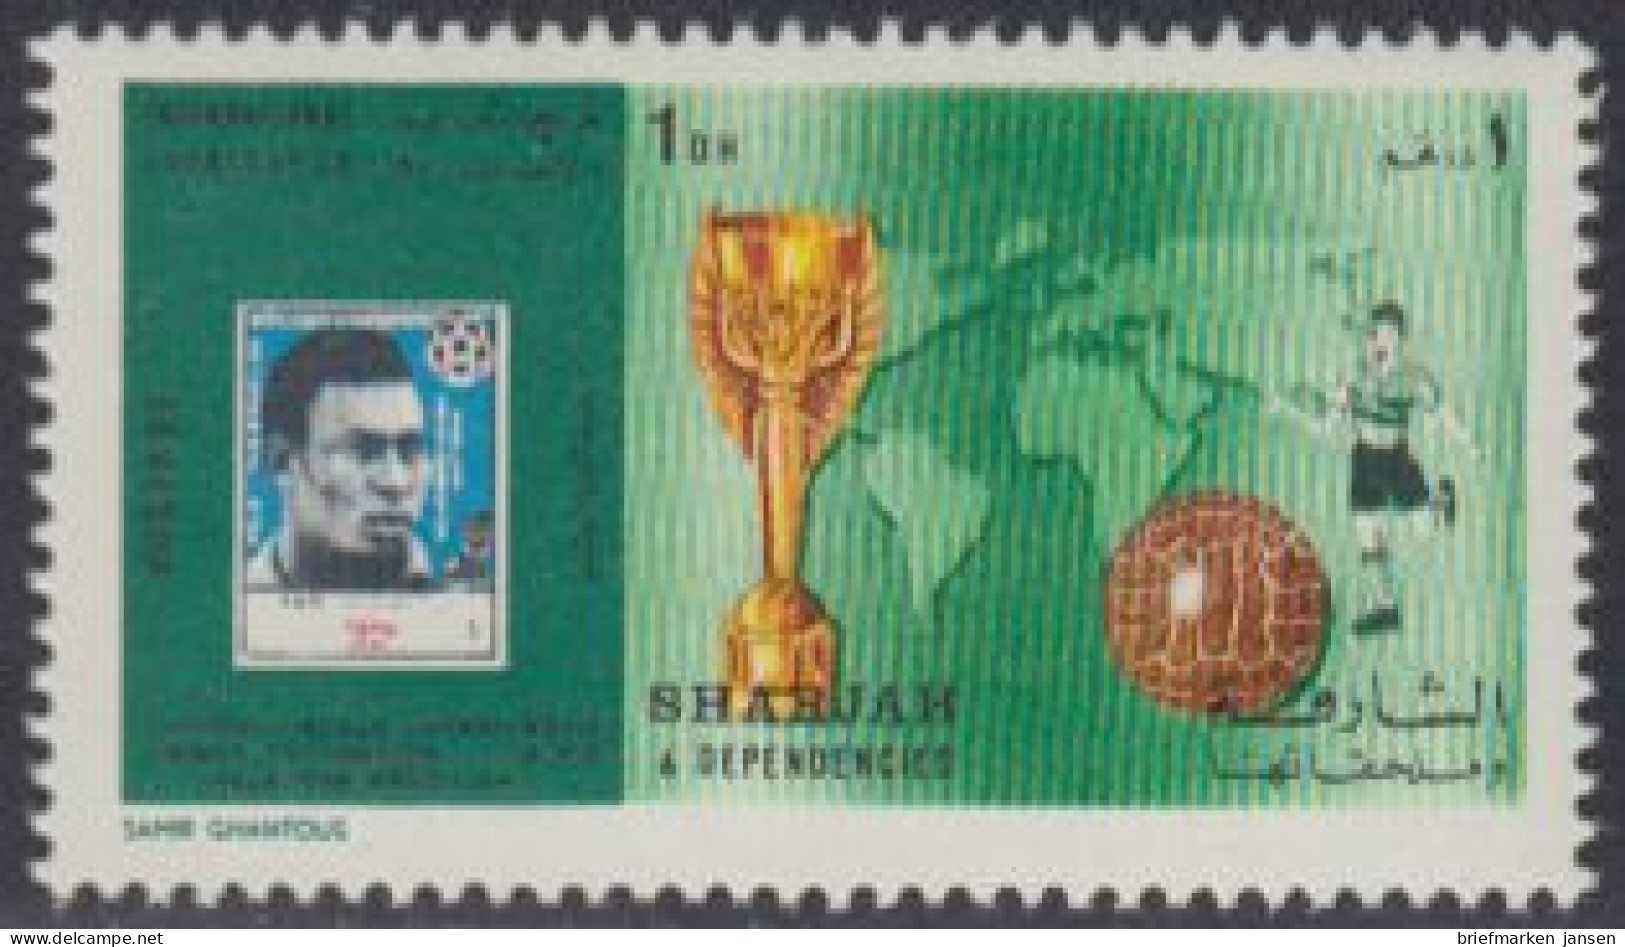 Sharjah Mi.Nr. 645A Fußball-WM 1970, Pele, Ball, Schiri, Weltkarte, Pokal (1 Dh) - Sharjah